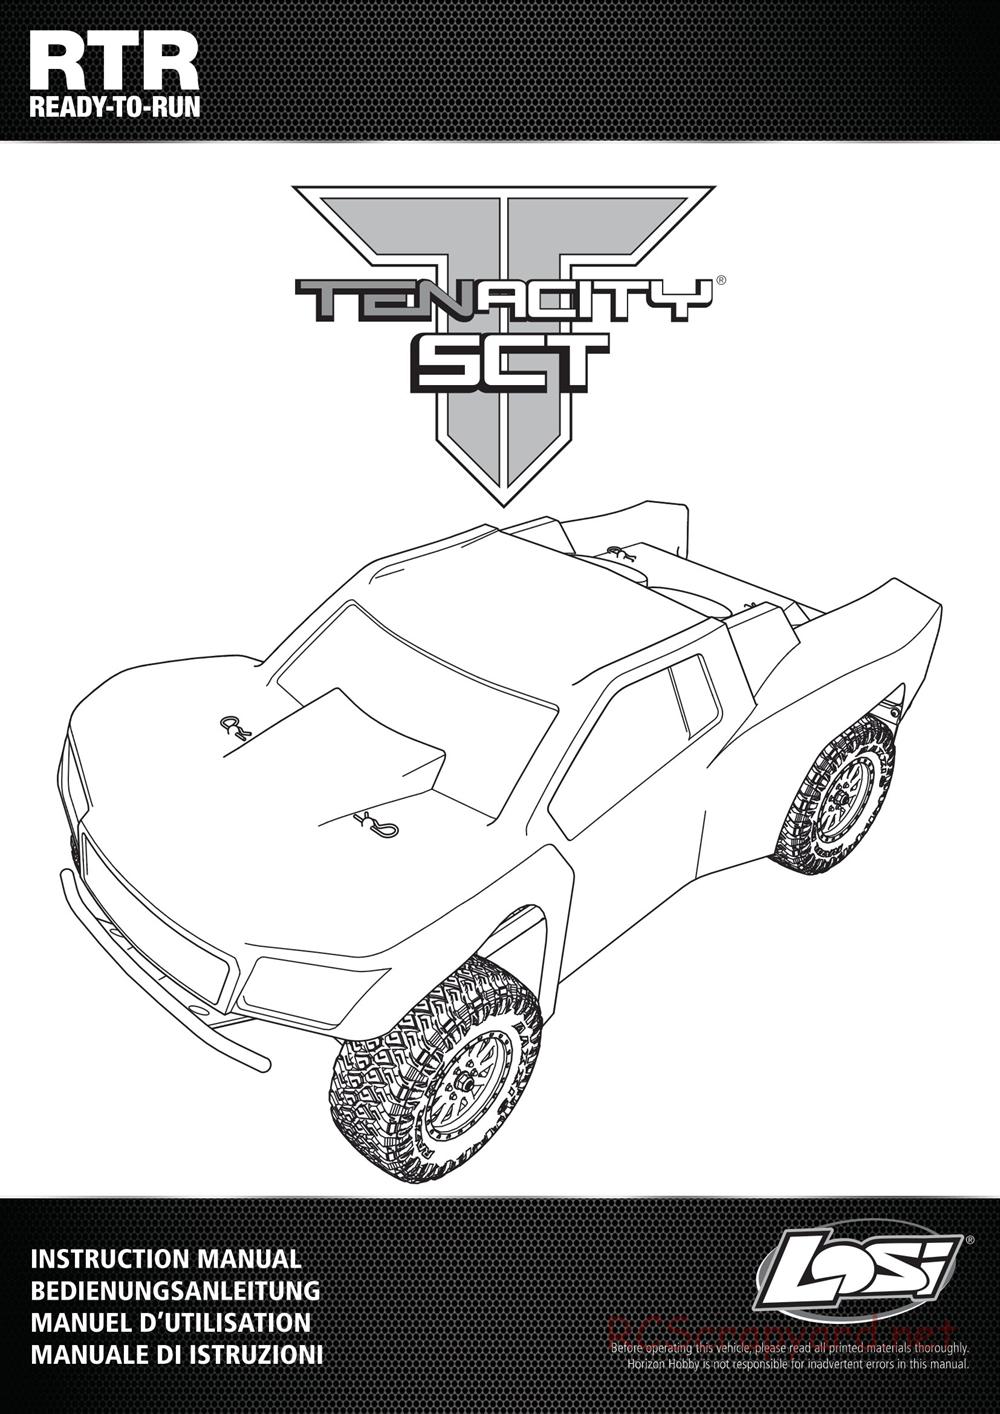 Team Losi - Tenacity-SCT - Manual - Page 1